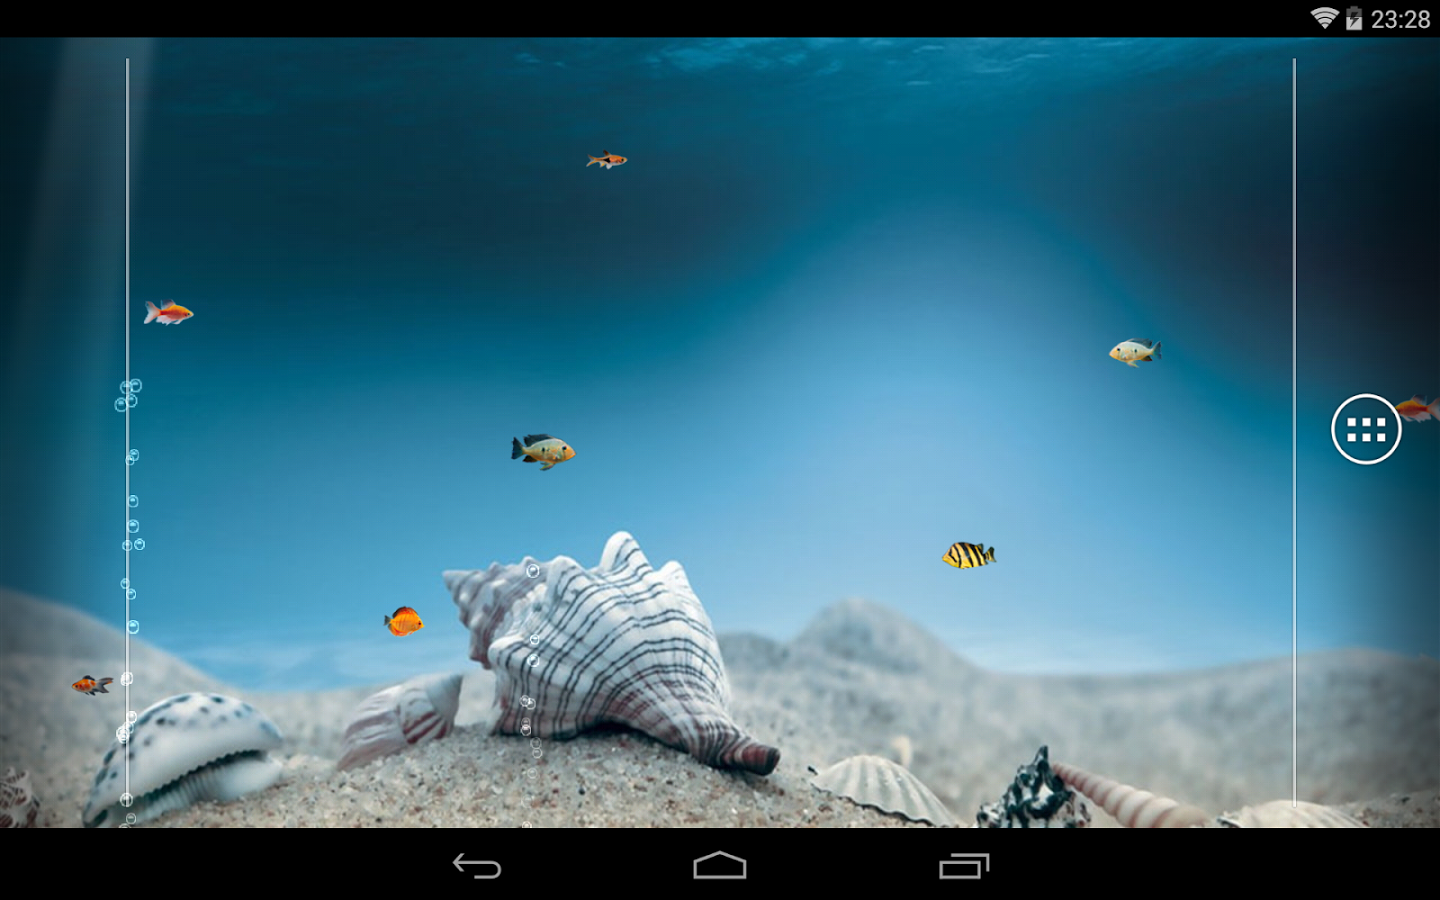 Underwater Sea Shells In The Ocean - HD Wallpaper 